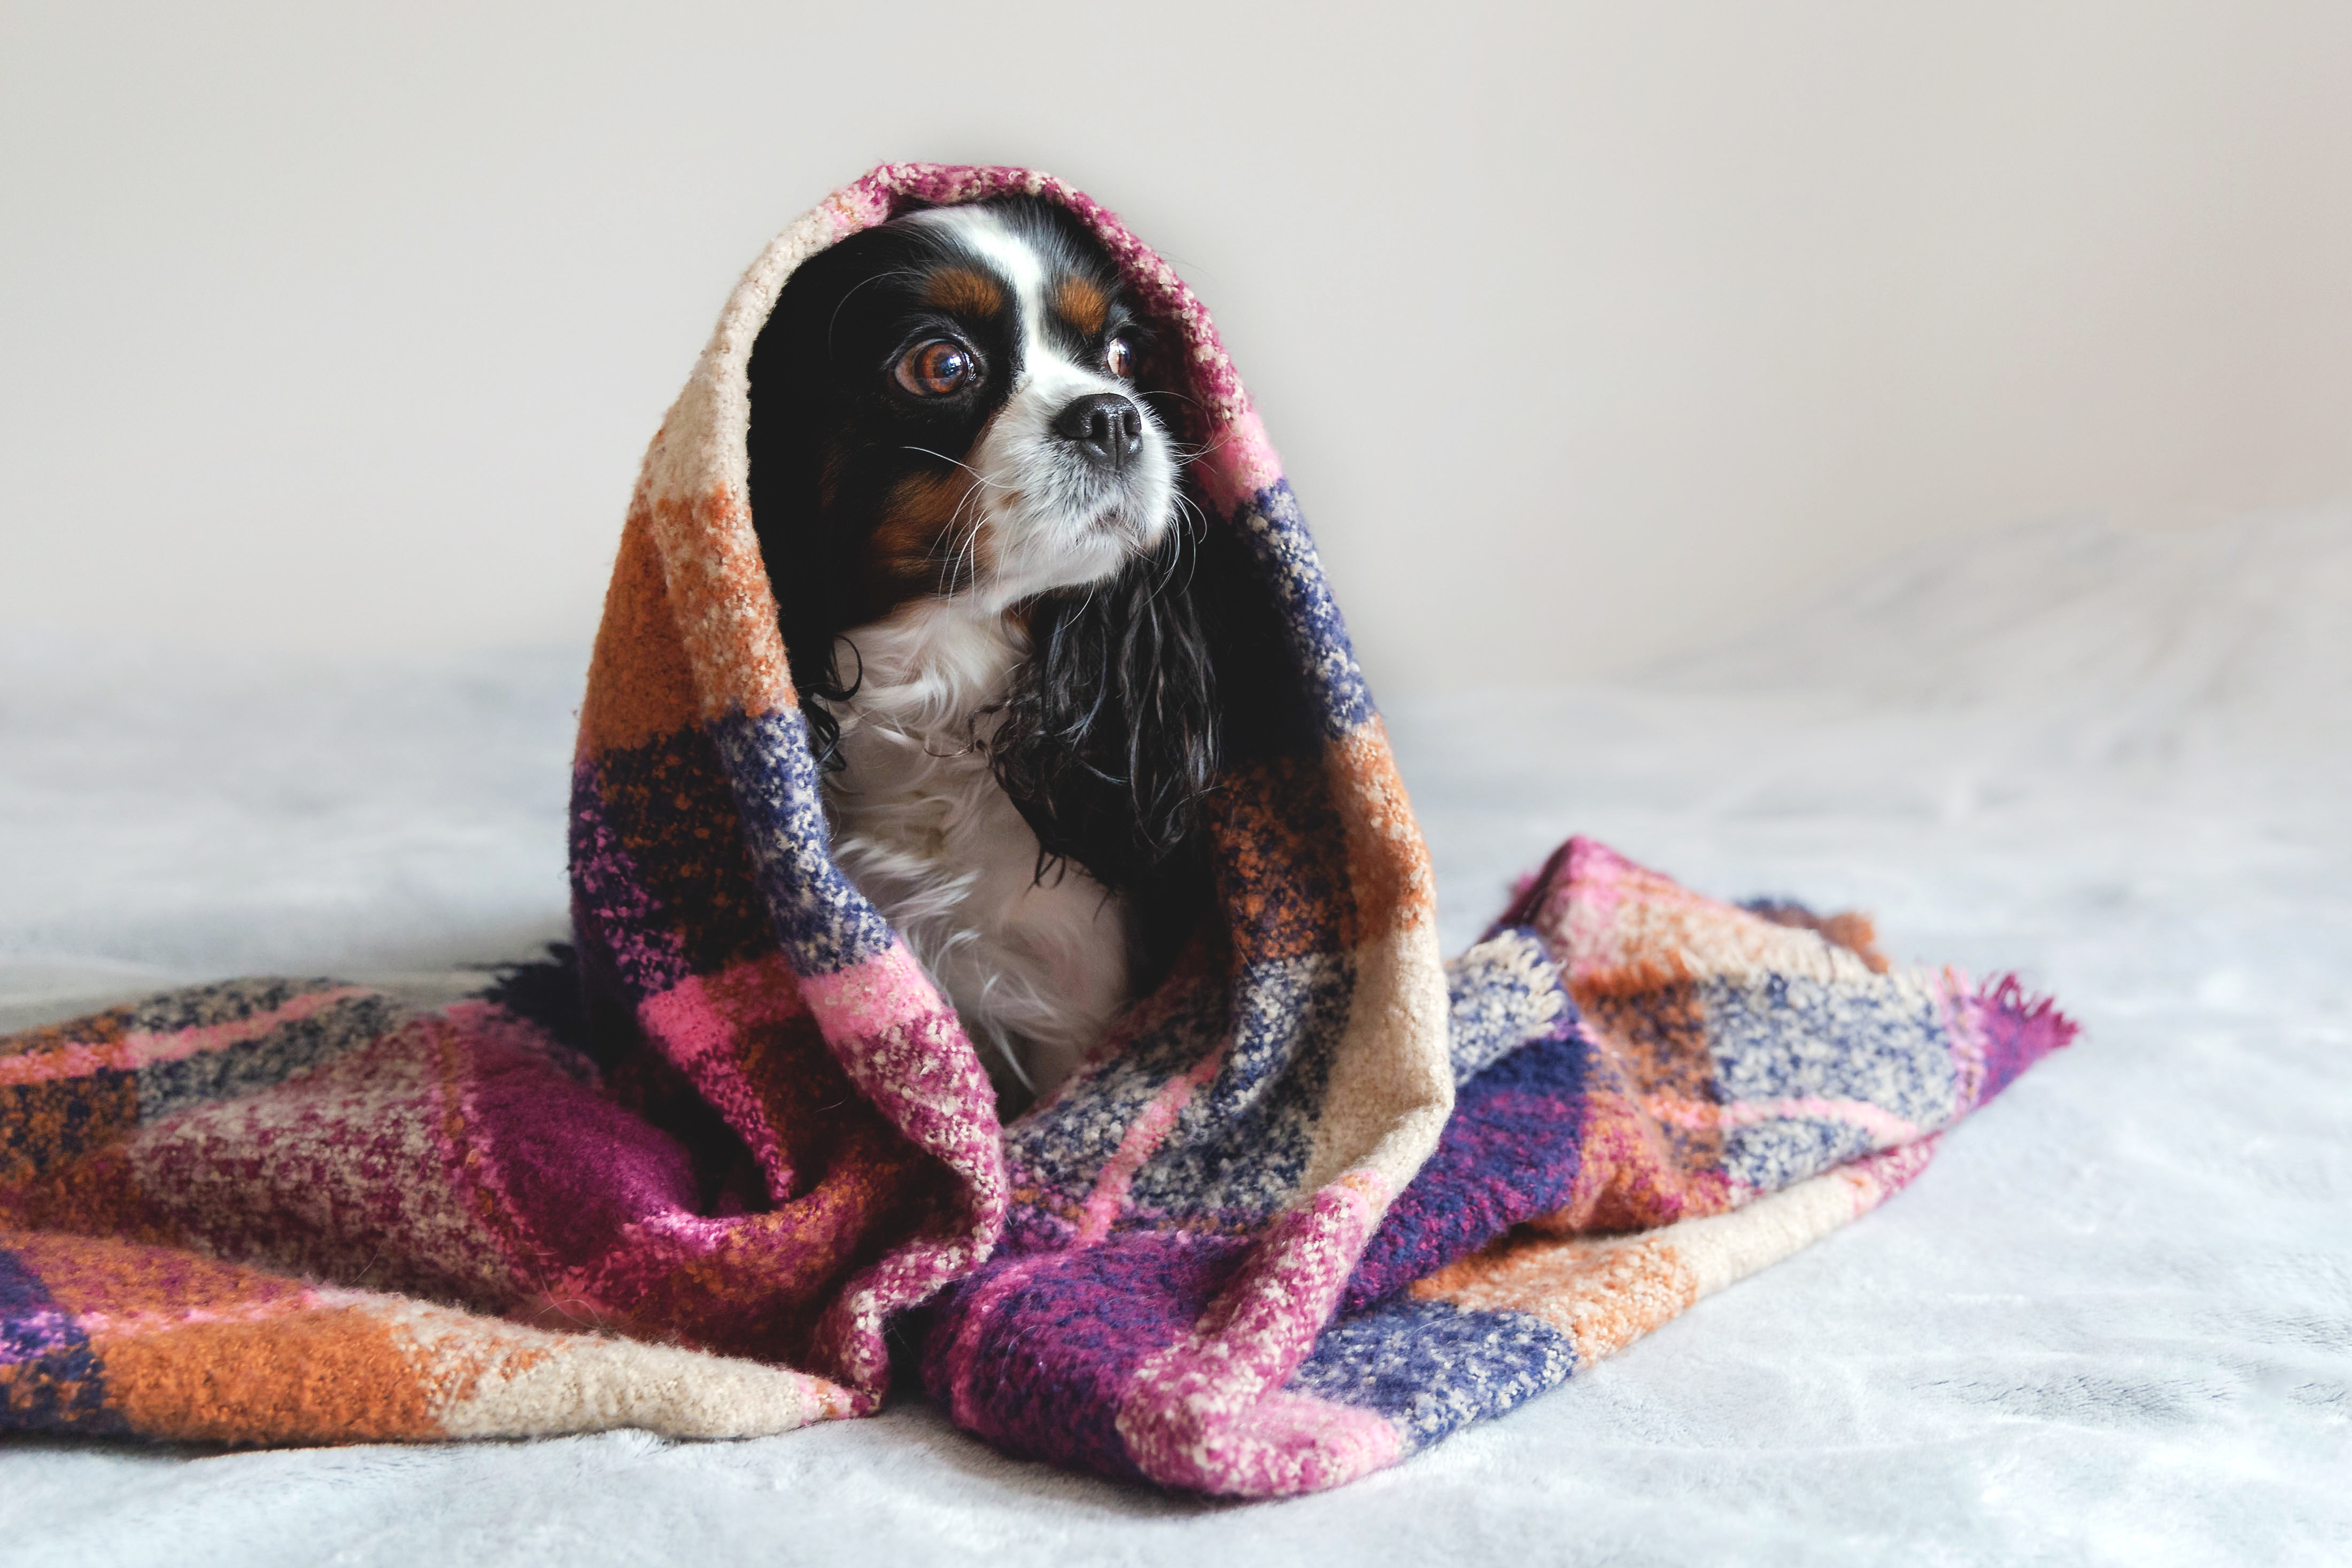 Cute spaniel puppy hides under a cozy multi colored blanket